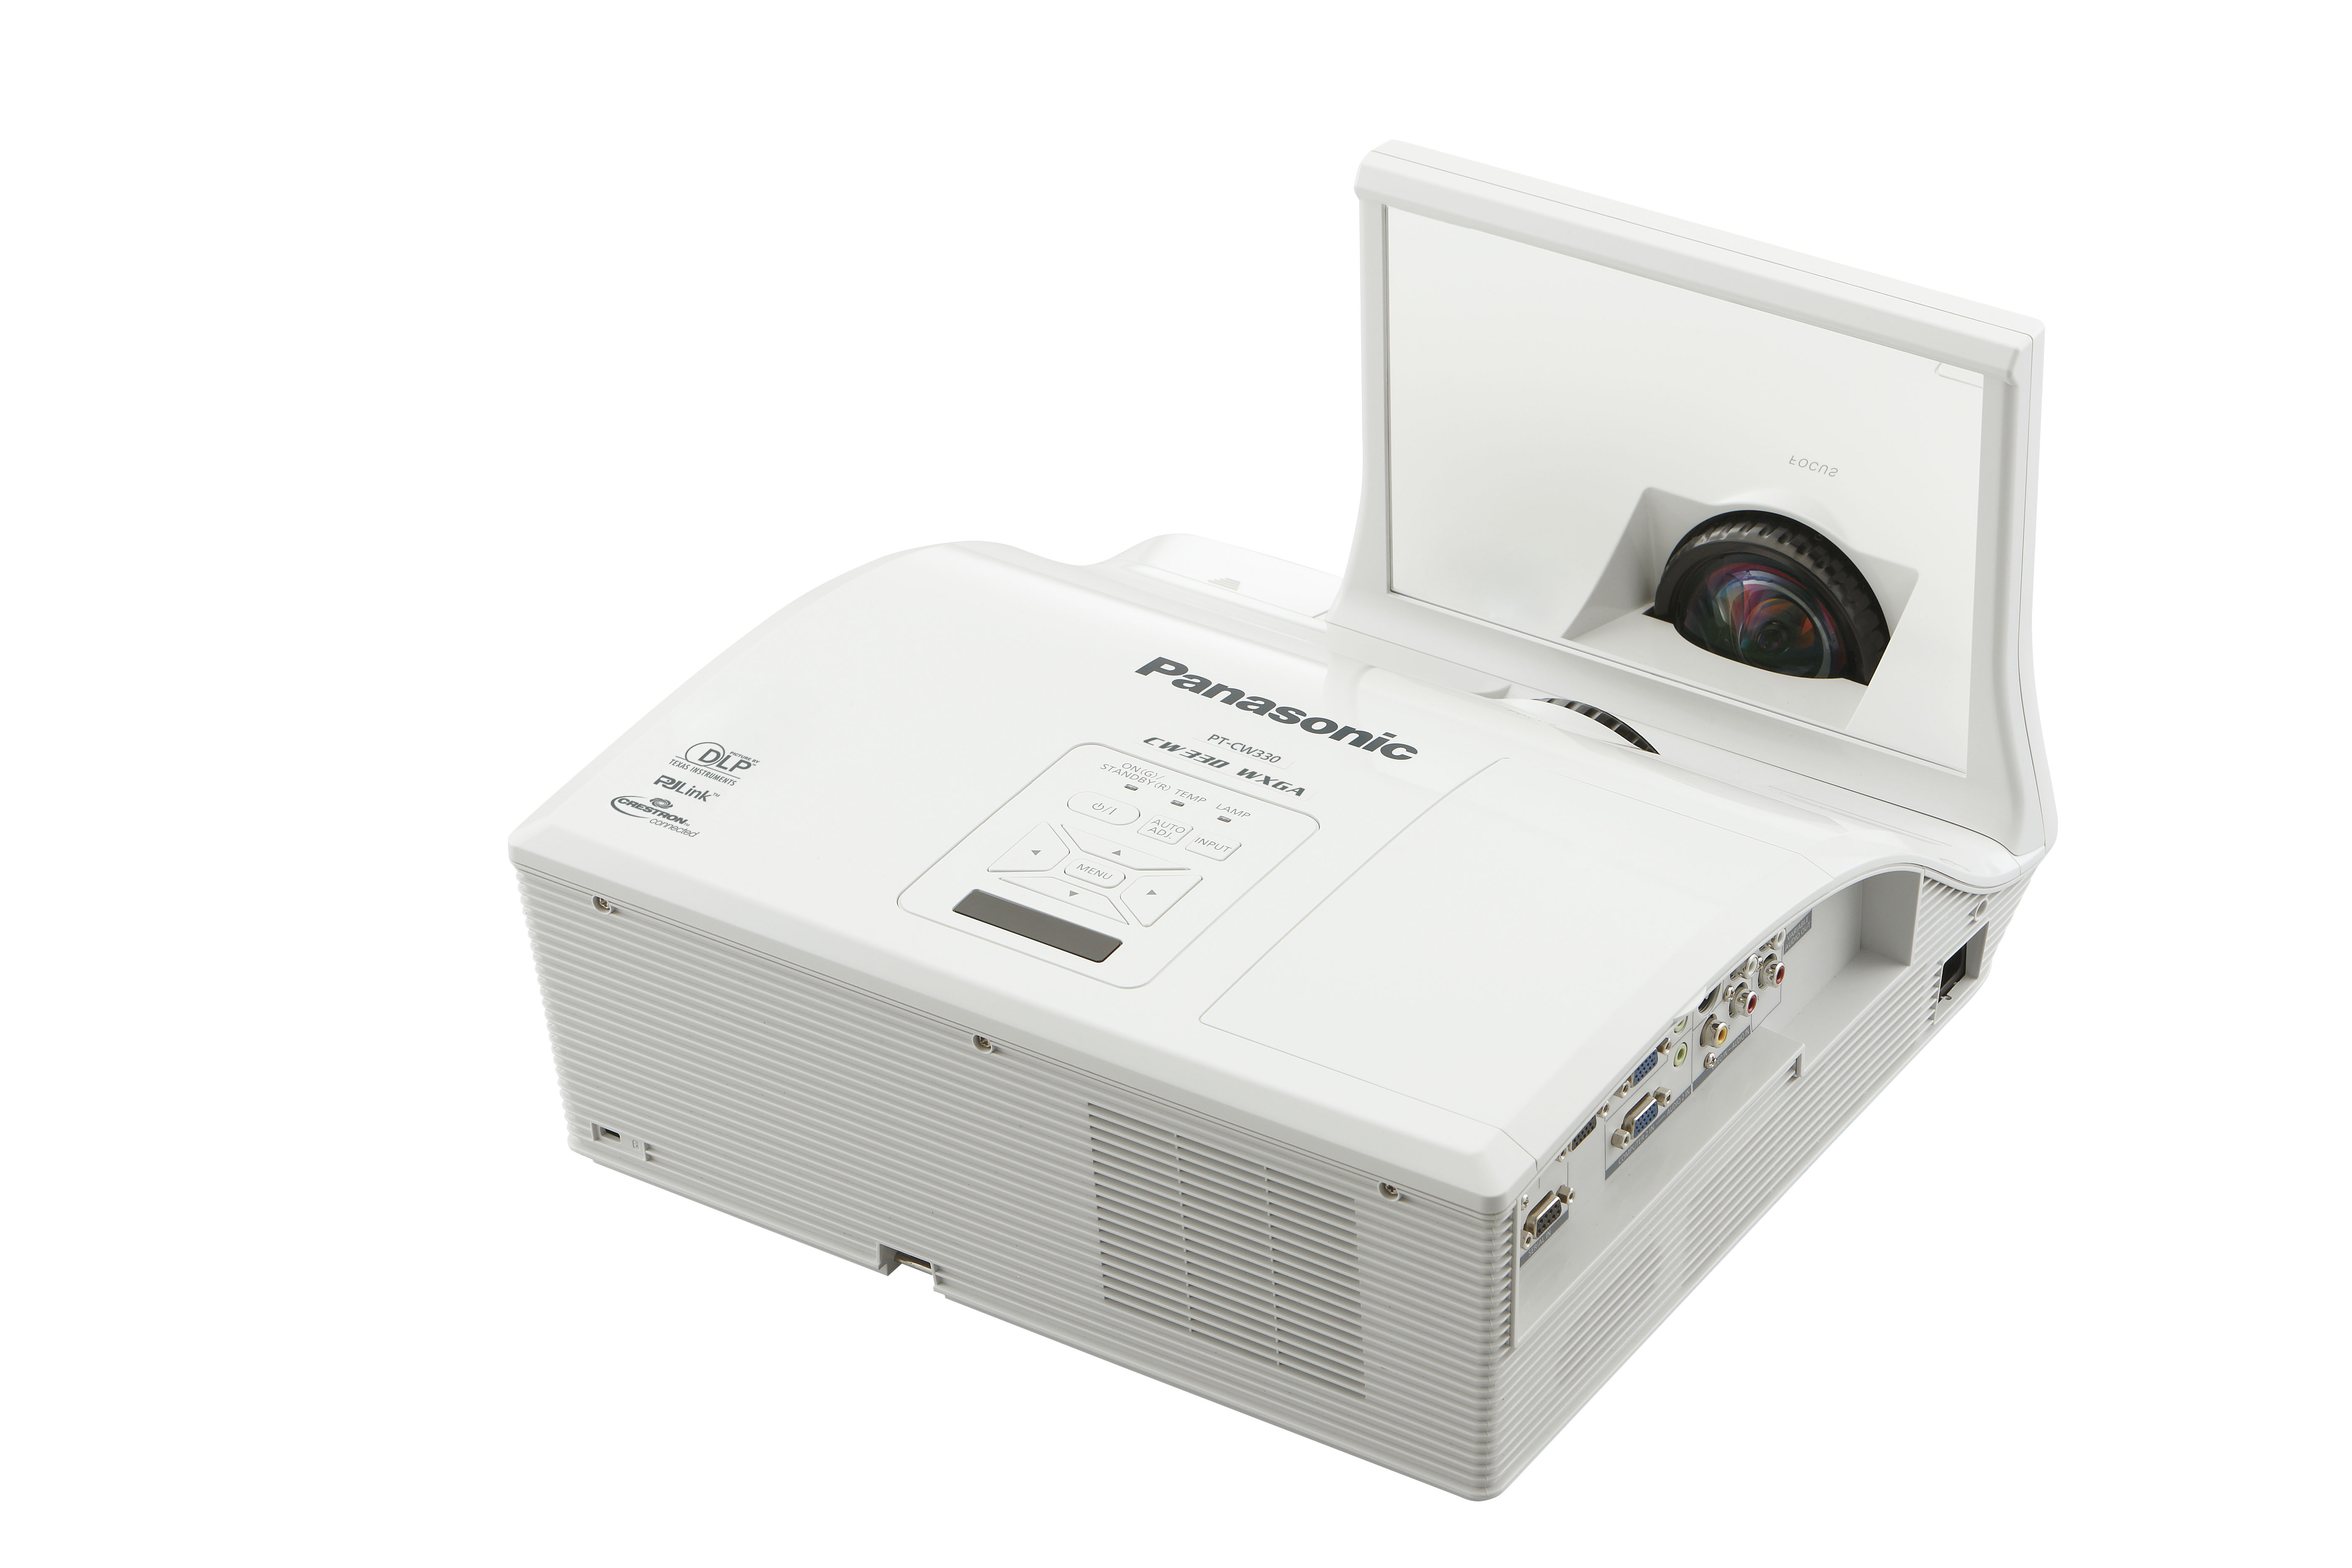 PT-CW330 Series - Panasonic Projector Product Database - Panasonic